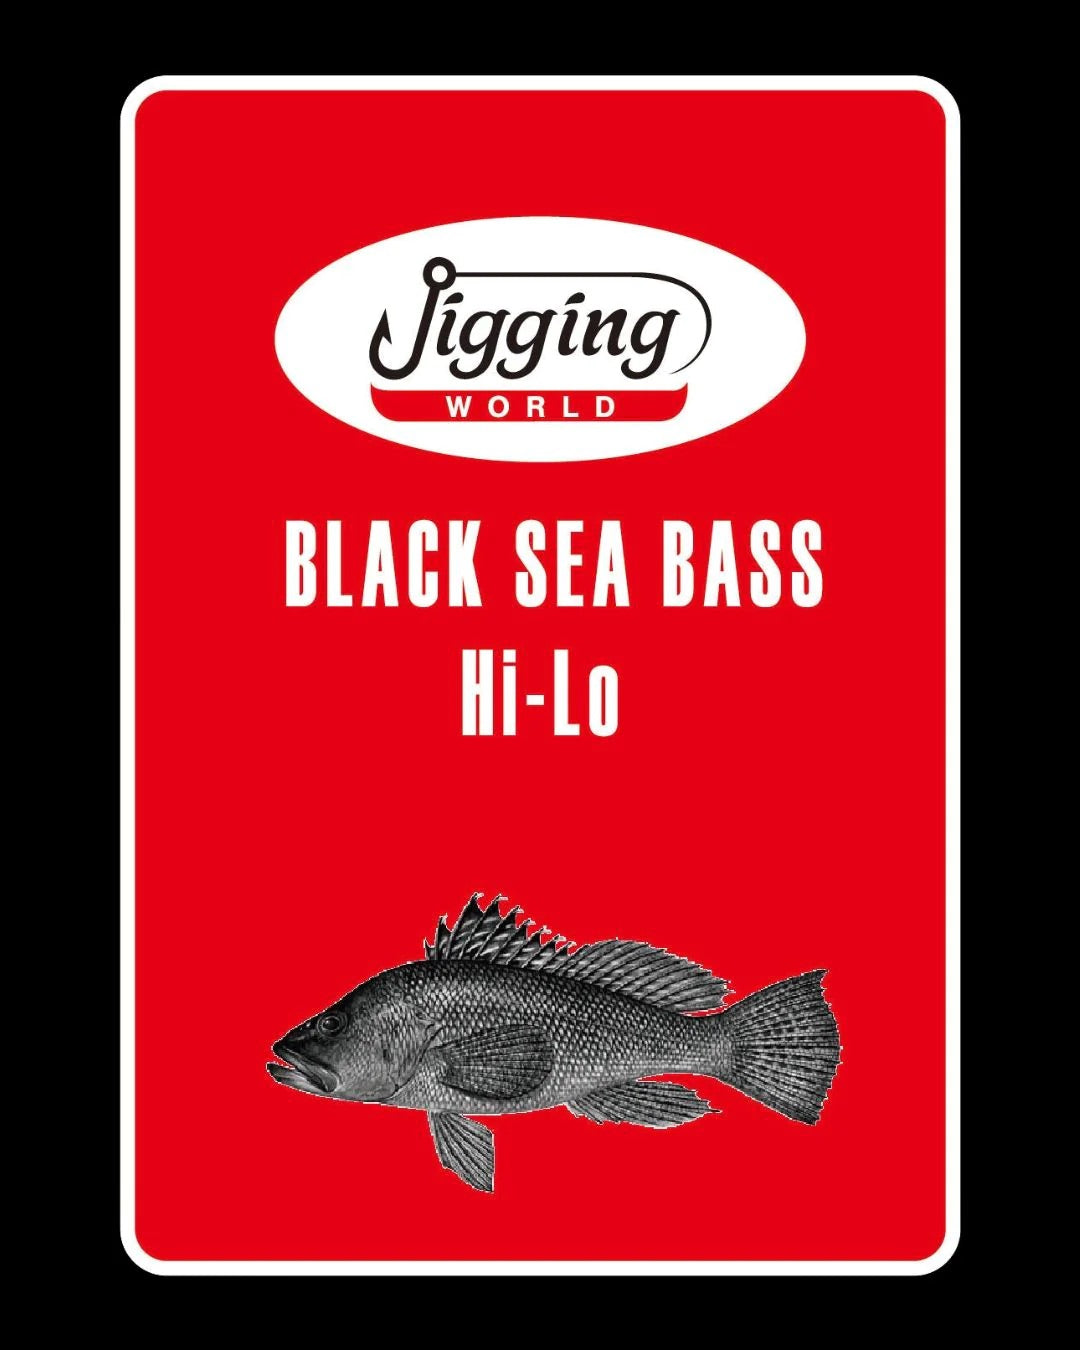 Jigging World - Black Sea Bass Hi-Lo Rigs